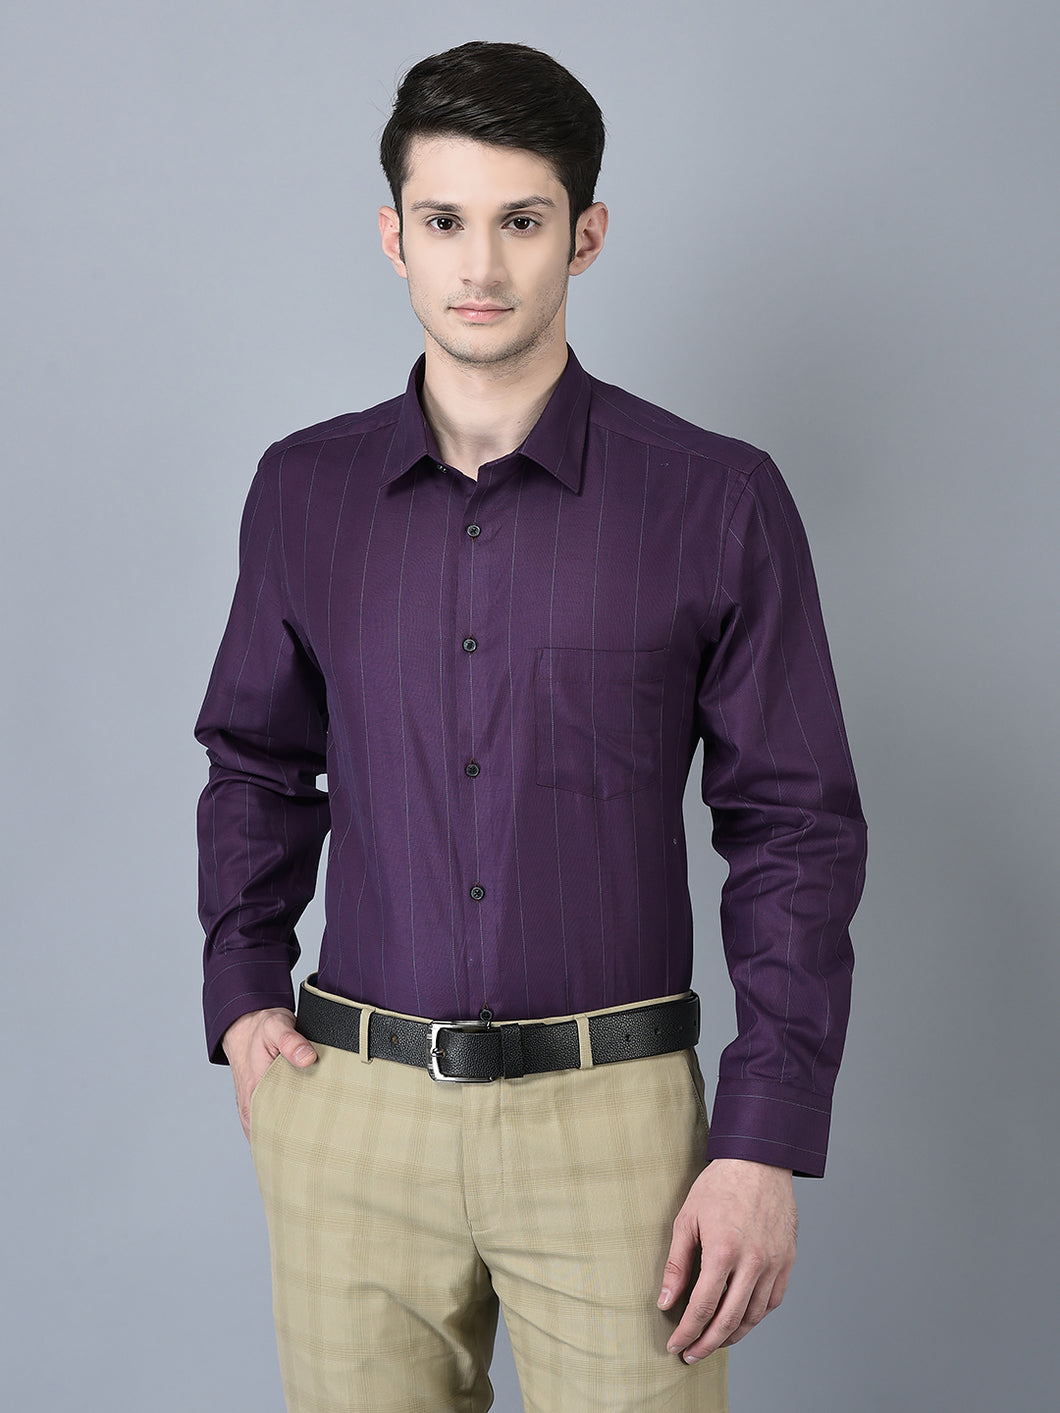 CANOE MEN Formal Shirt Charcoal Color Cotton Fabric Button Closure Striped